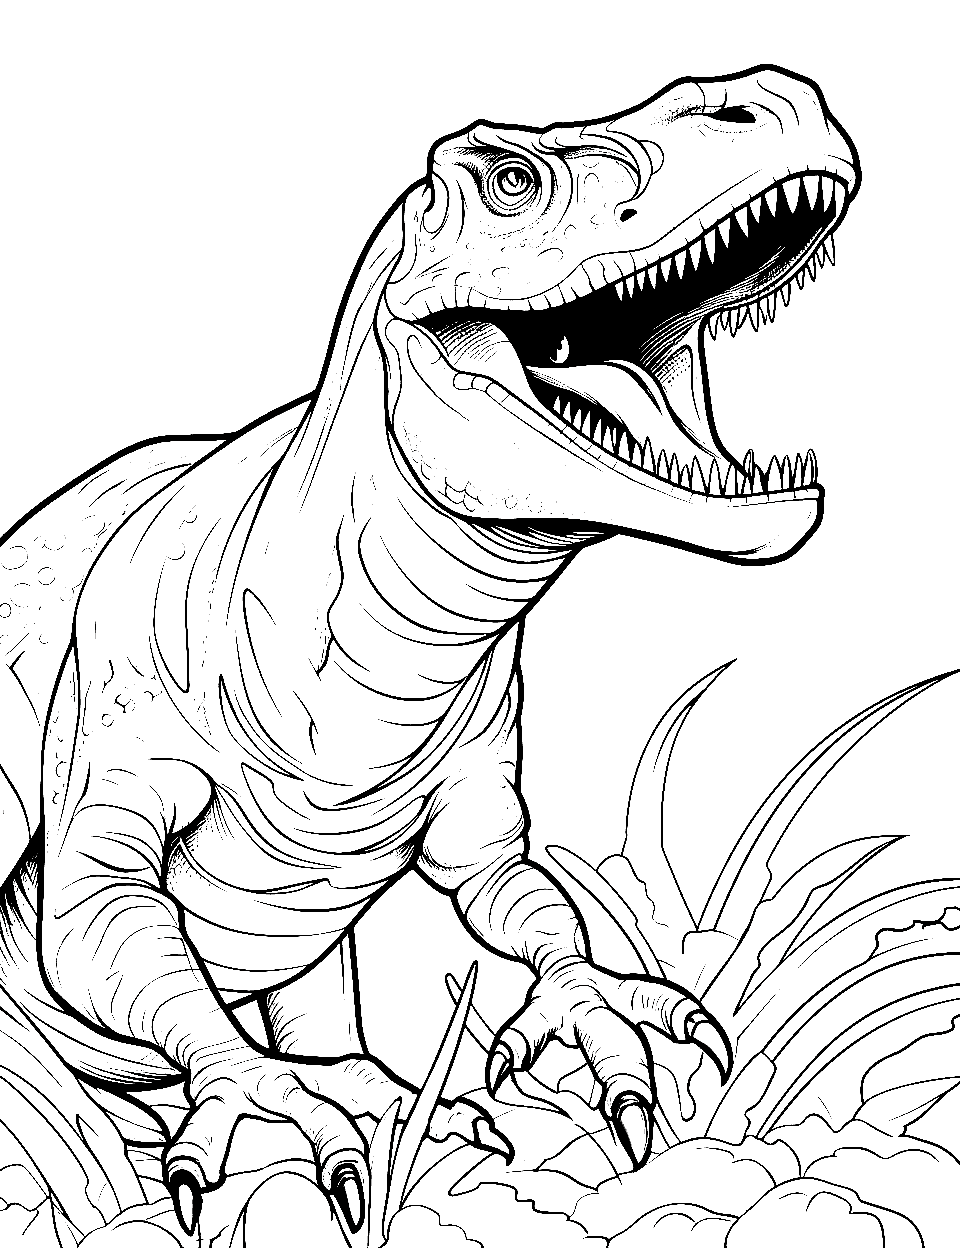 Advanced T Rex Details T-rex Coloring Page - A complex T-Rex scene with intricate design elements.